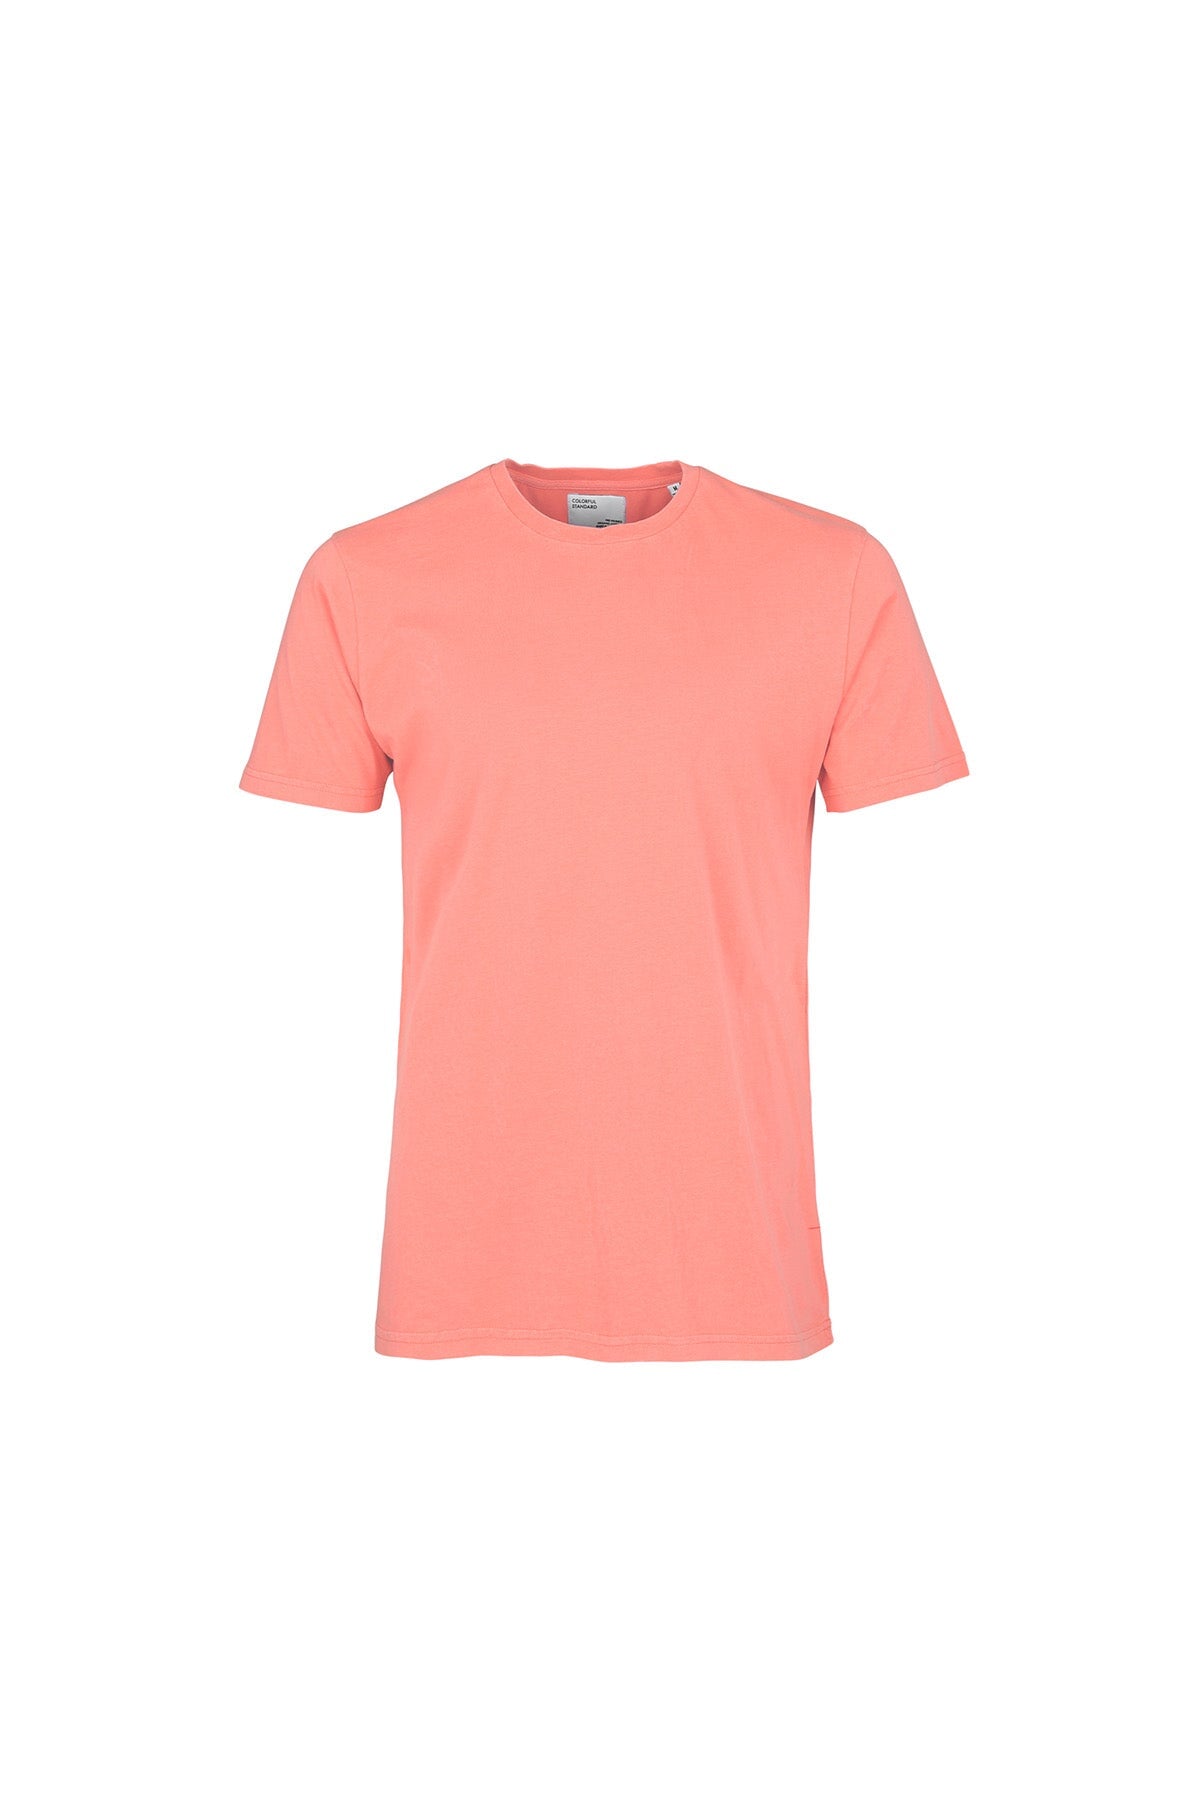 T-Shirt Classic Organic Tee Bright Coral T-Shirt Colorful Standard 